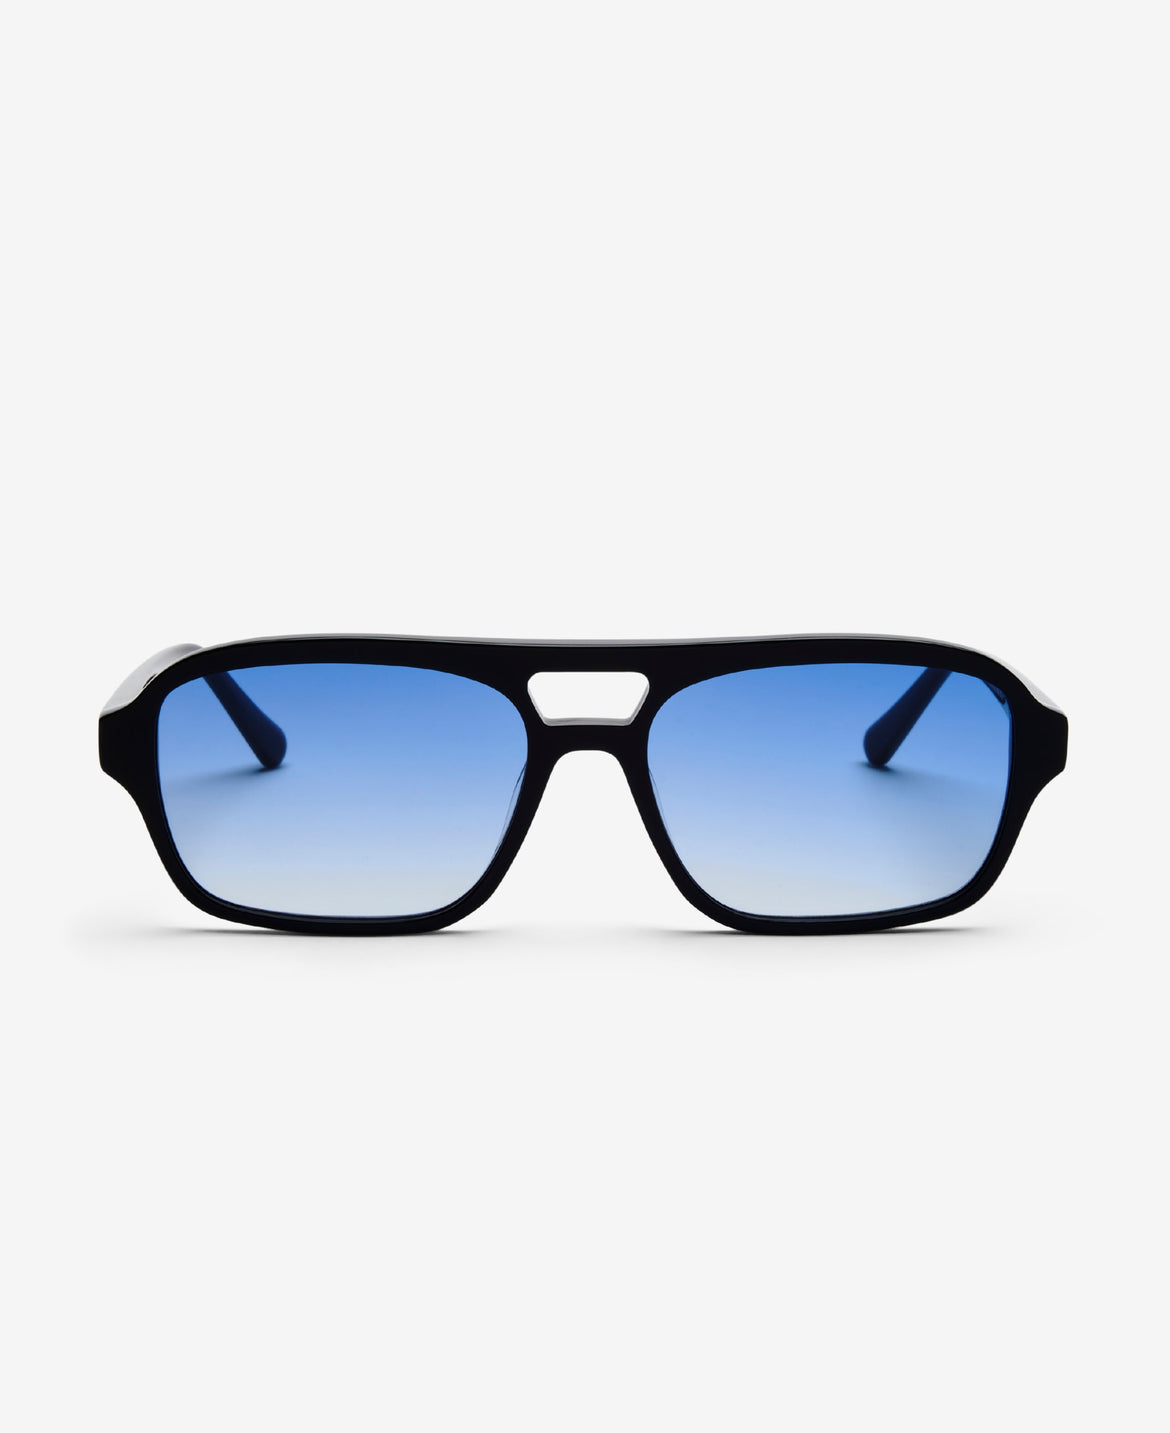 Burt Black Gradient Blue Sunglasses, Confort and Style